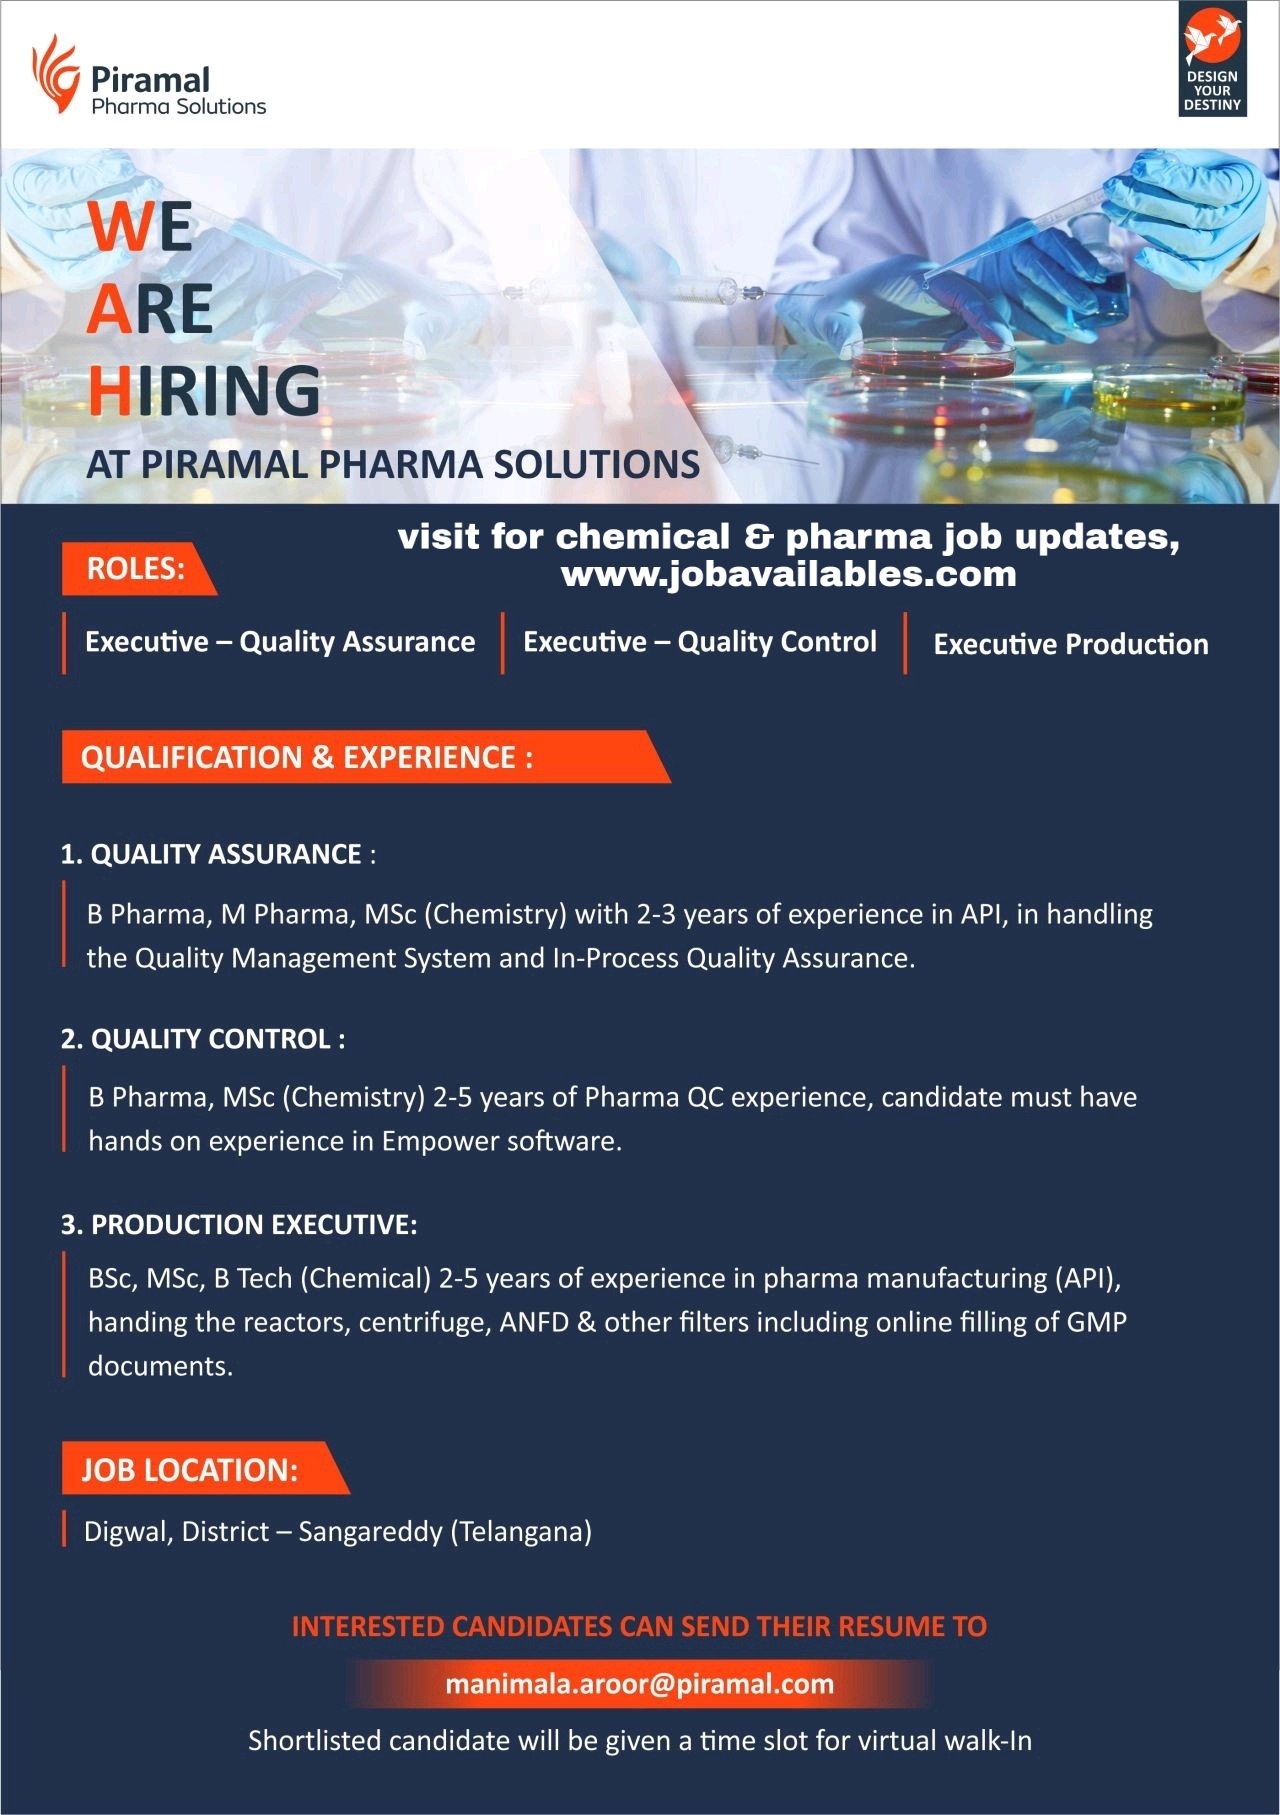 Job Availables, Piramal Pharma Solutions Job Opening For B.Tech Chemical/ BSc/ MSc/ B.Pharm/ M.Pharm In Production/ QA / QC Departments